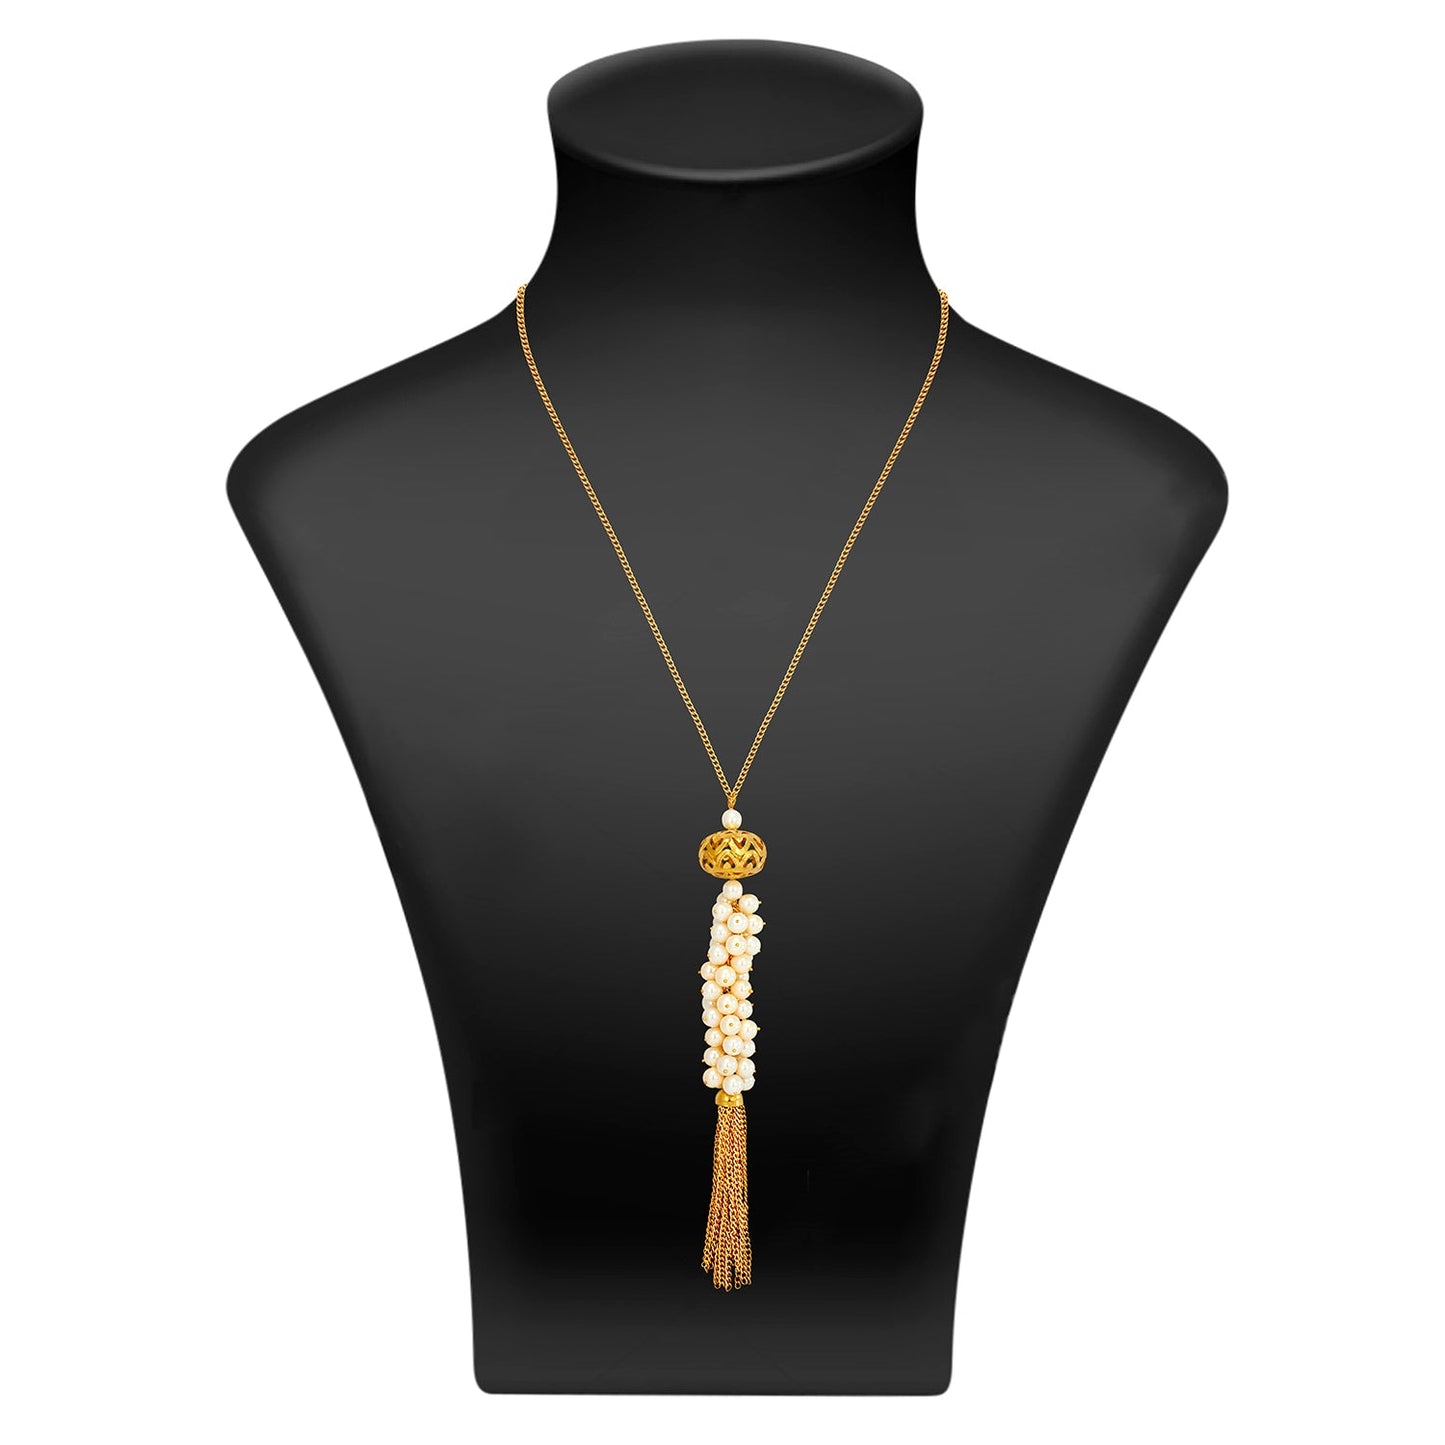 Long Gold Premium Fashonable  Tassle Designer Necklace with Pearls (SJ_2144)